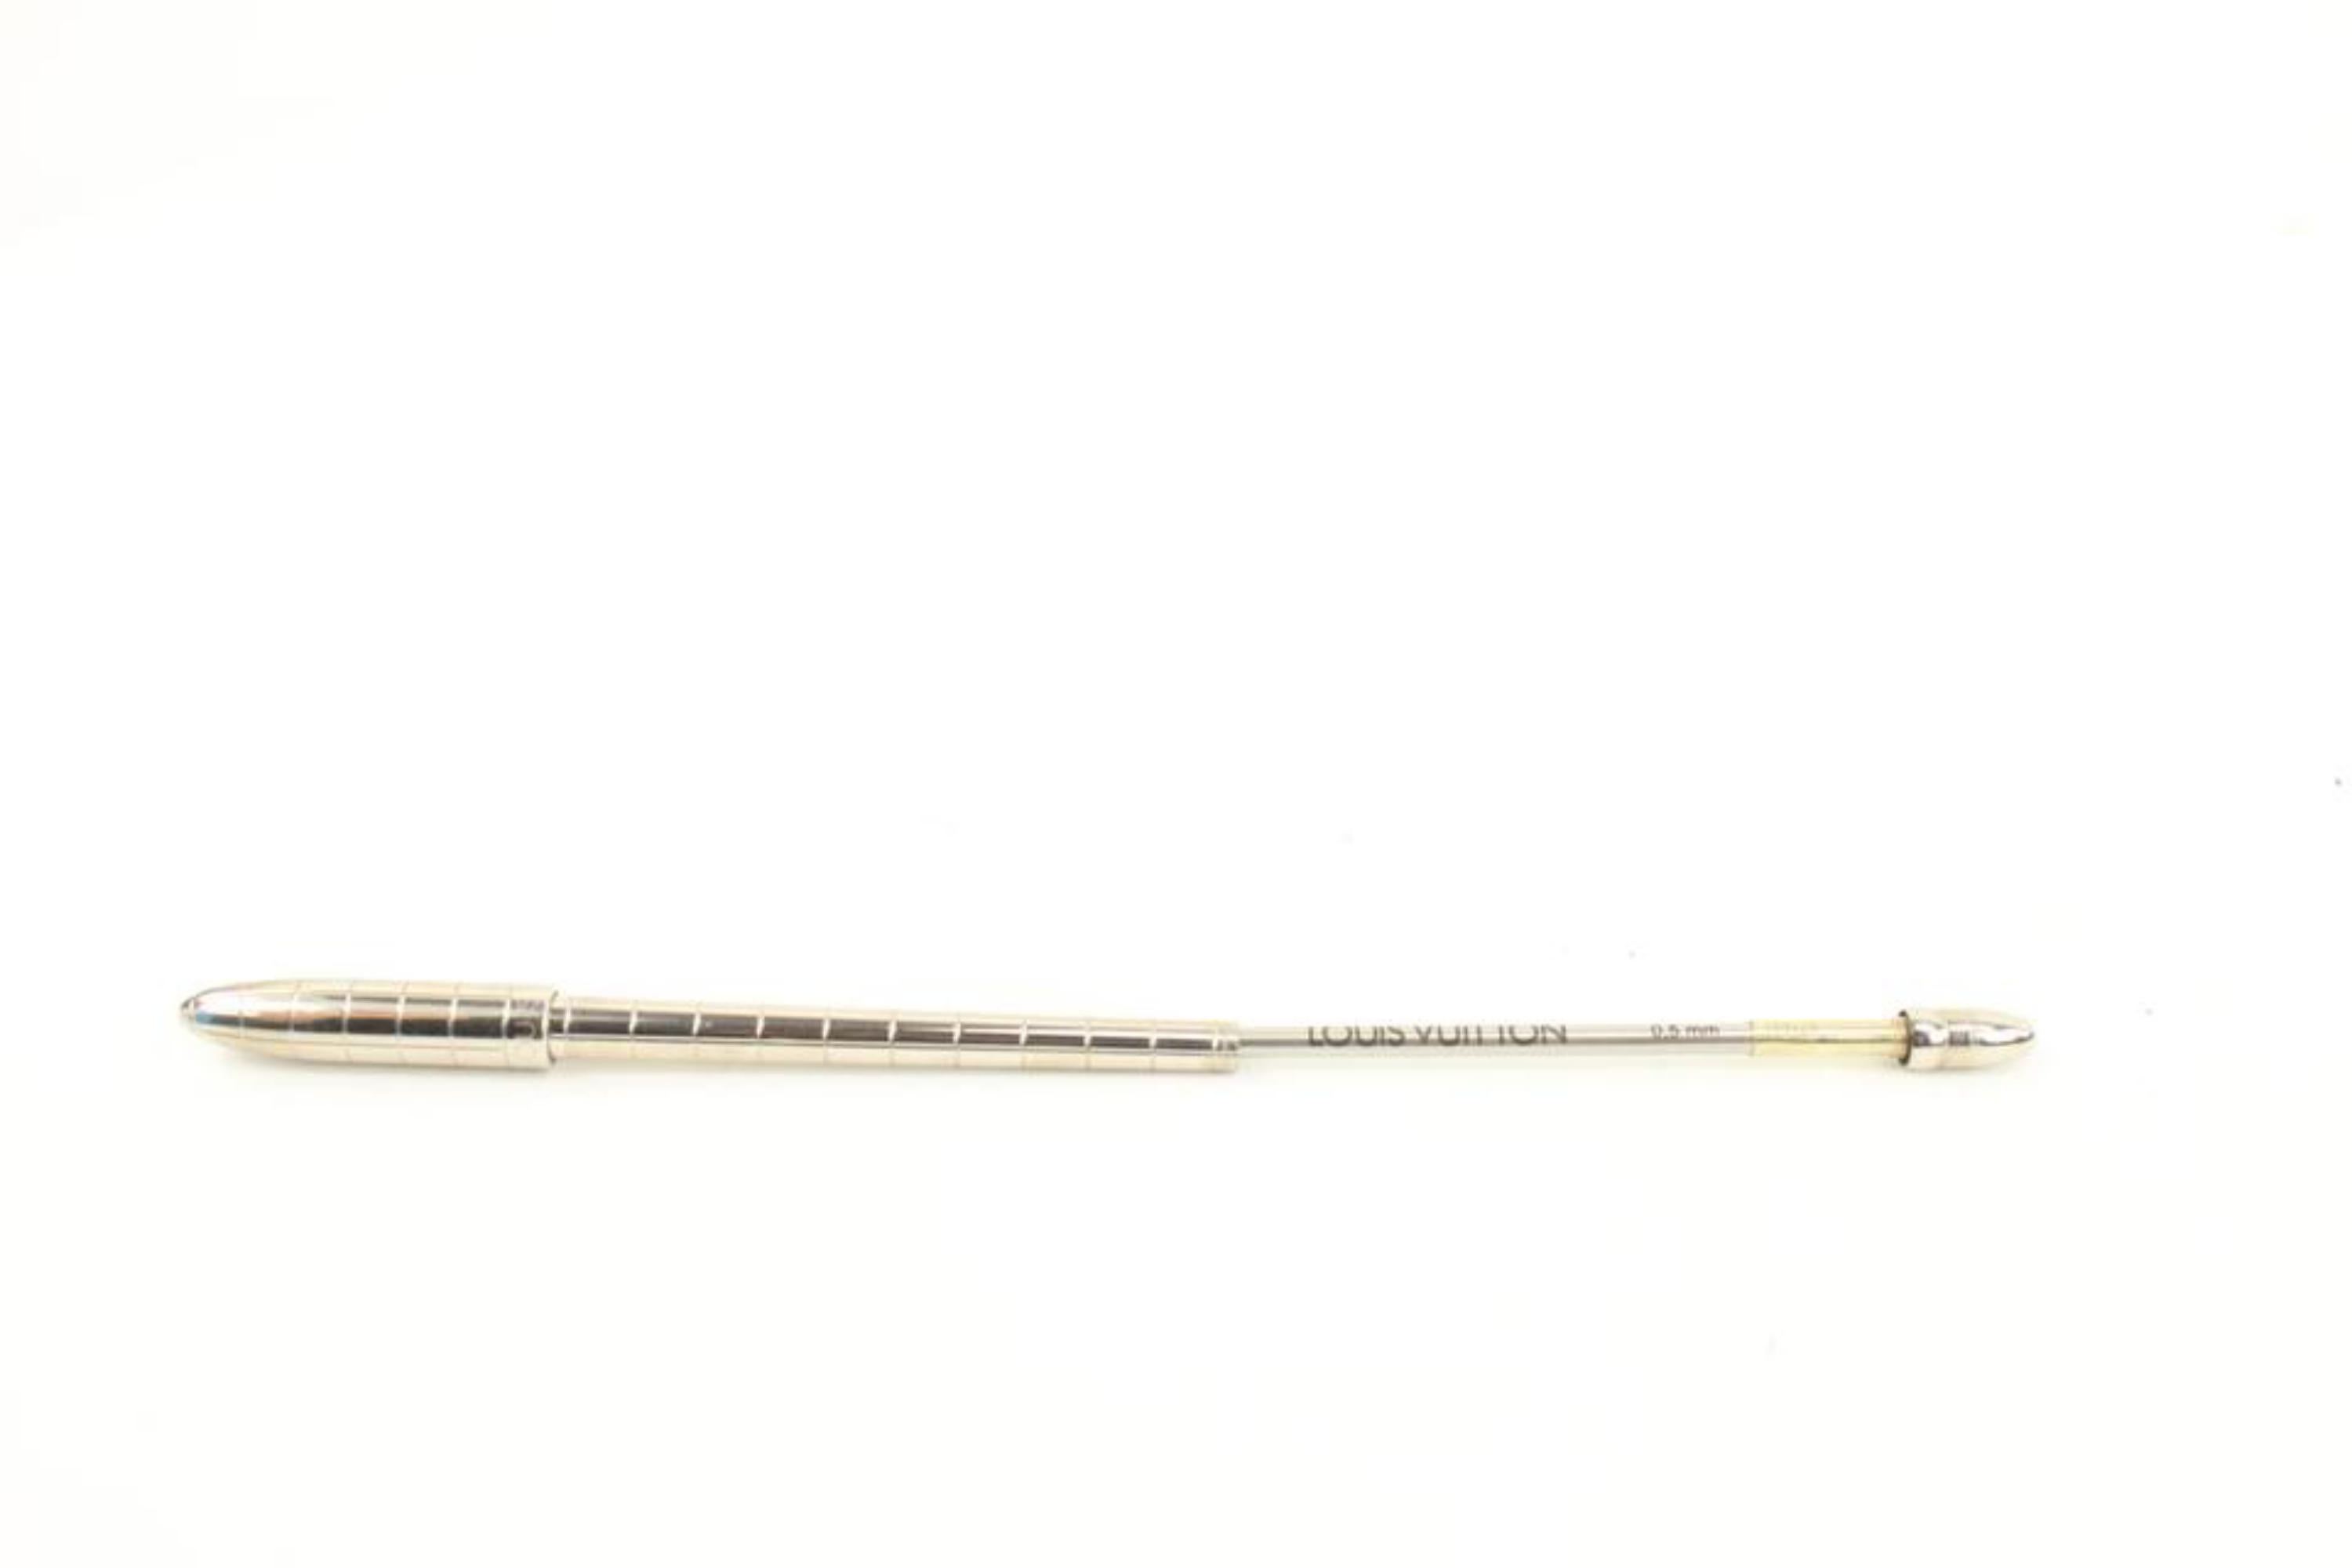 Louis Vuitton Silver Tone Ball Point Stylo Mechanical Pencil for  Agenda  1L622a 5